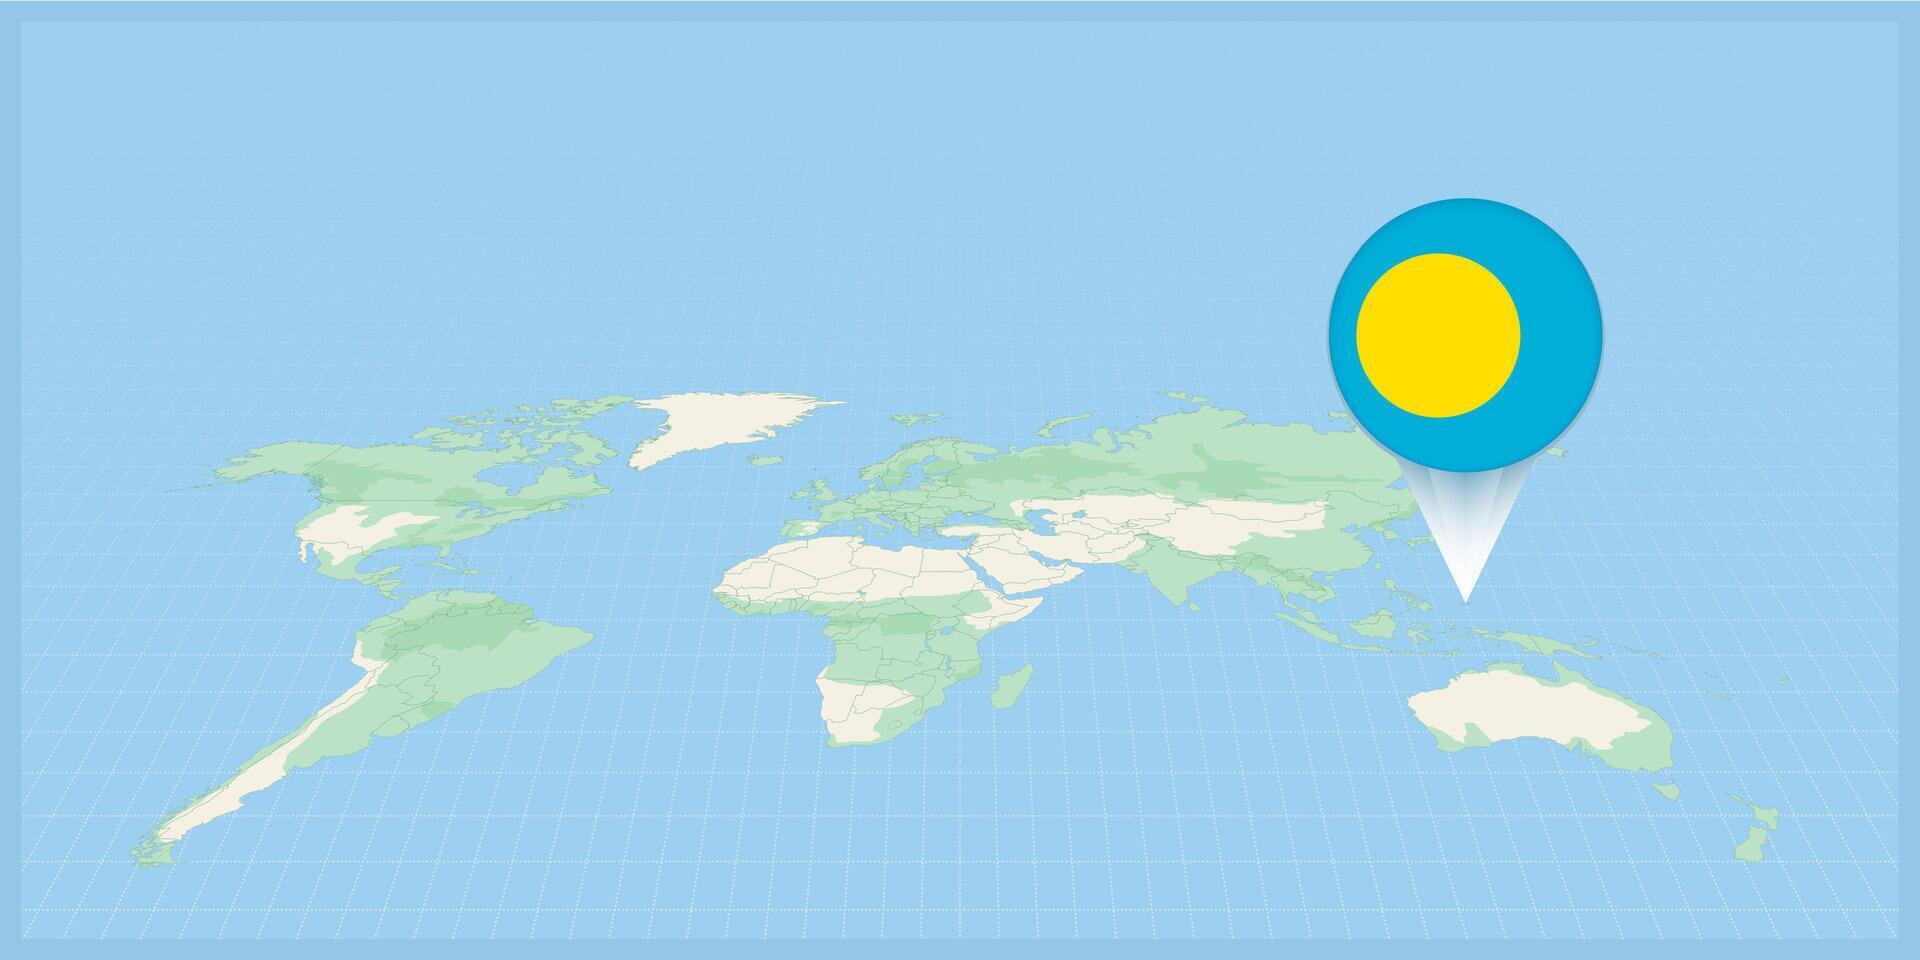 plaats van Palau Aan de wereld kaart, gemarkeerd met Palau vlag pin. vector